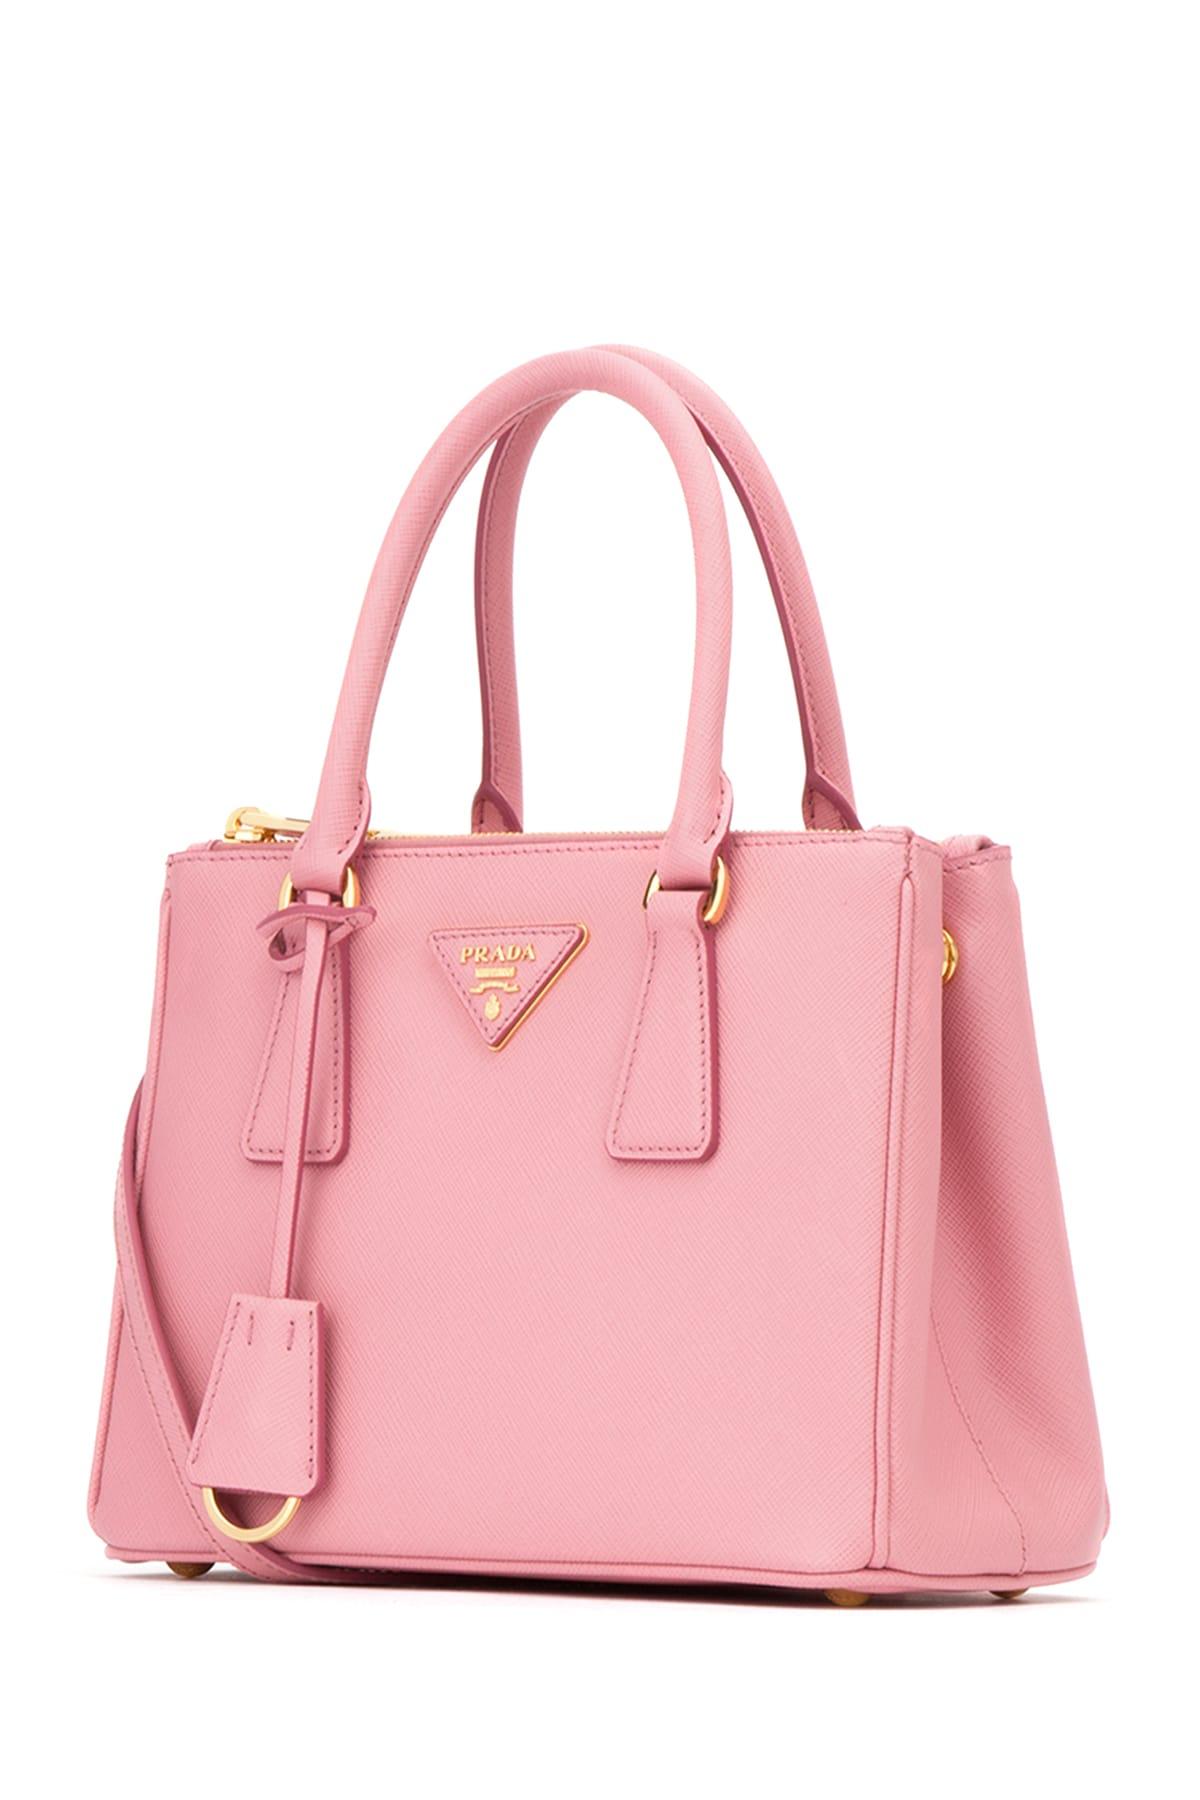 Prada Leather Galleria Mini Tote Bag in Pink | Lyst